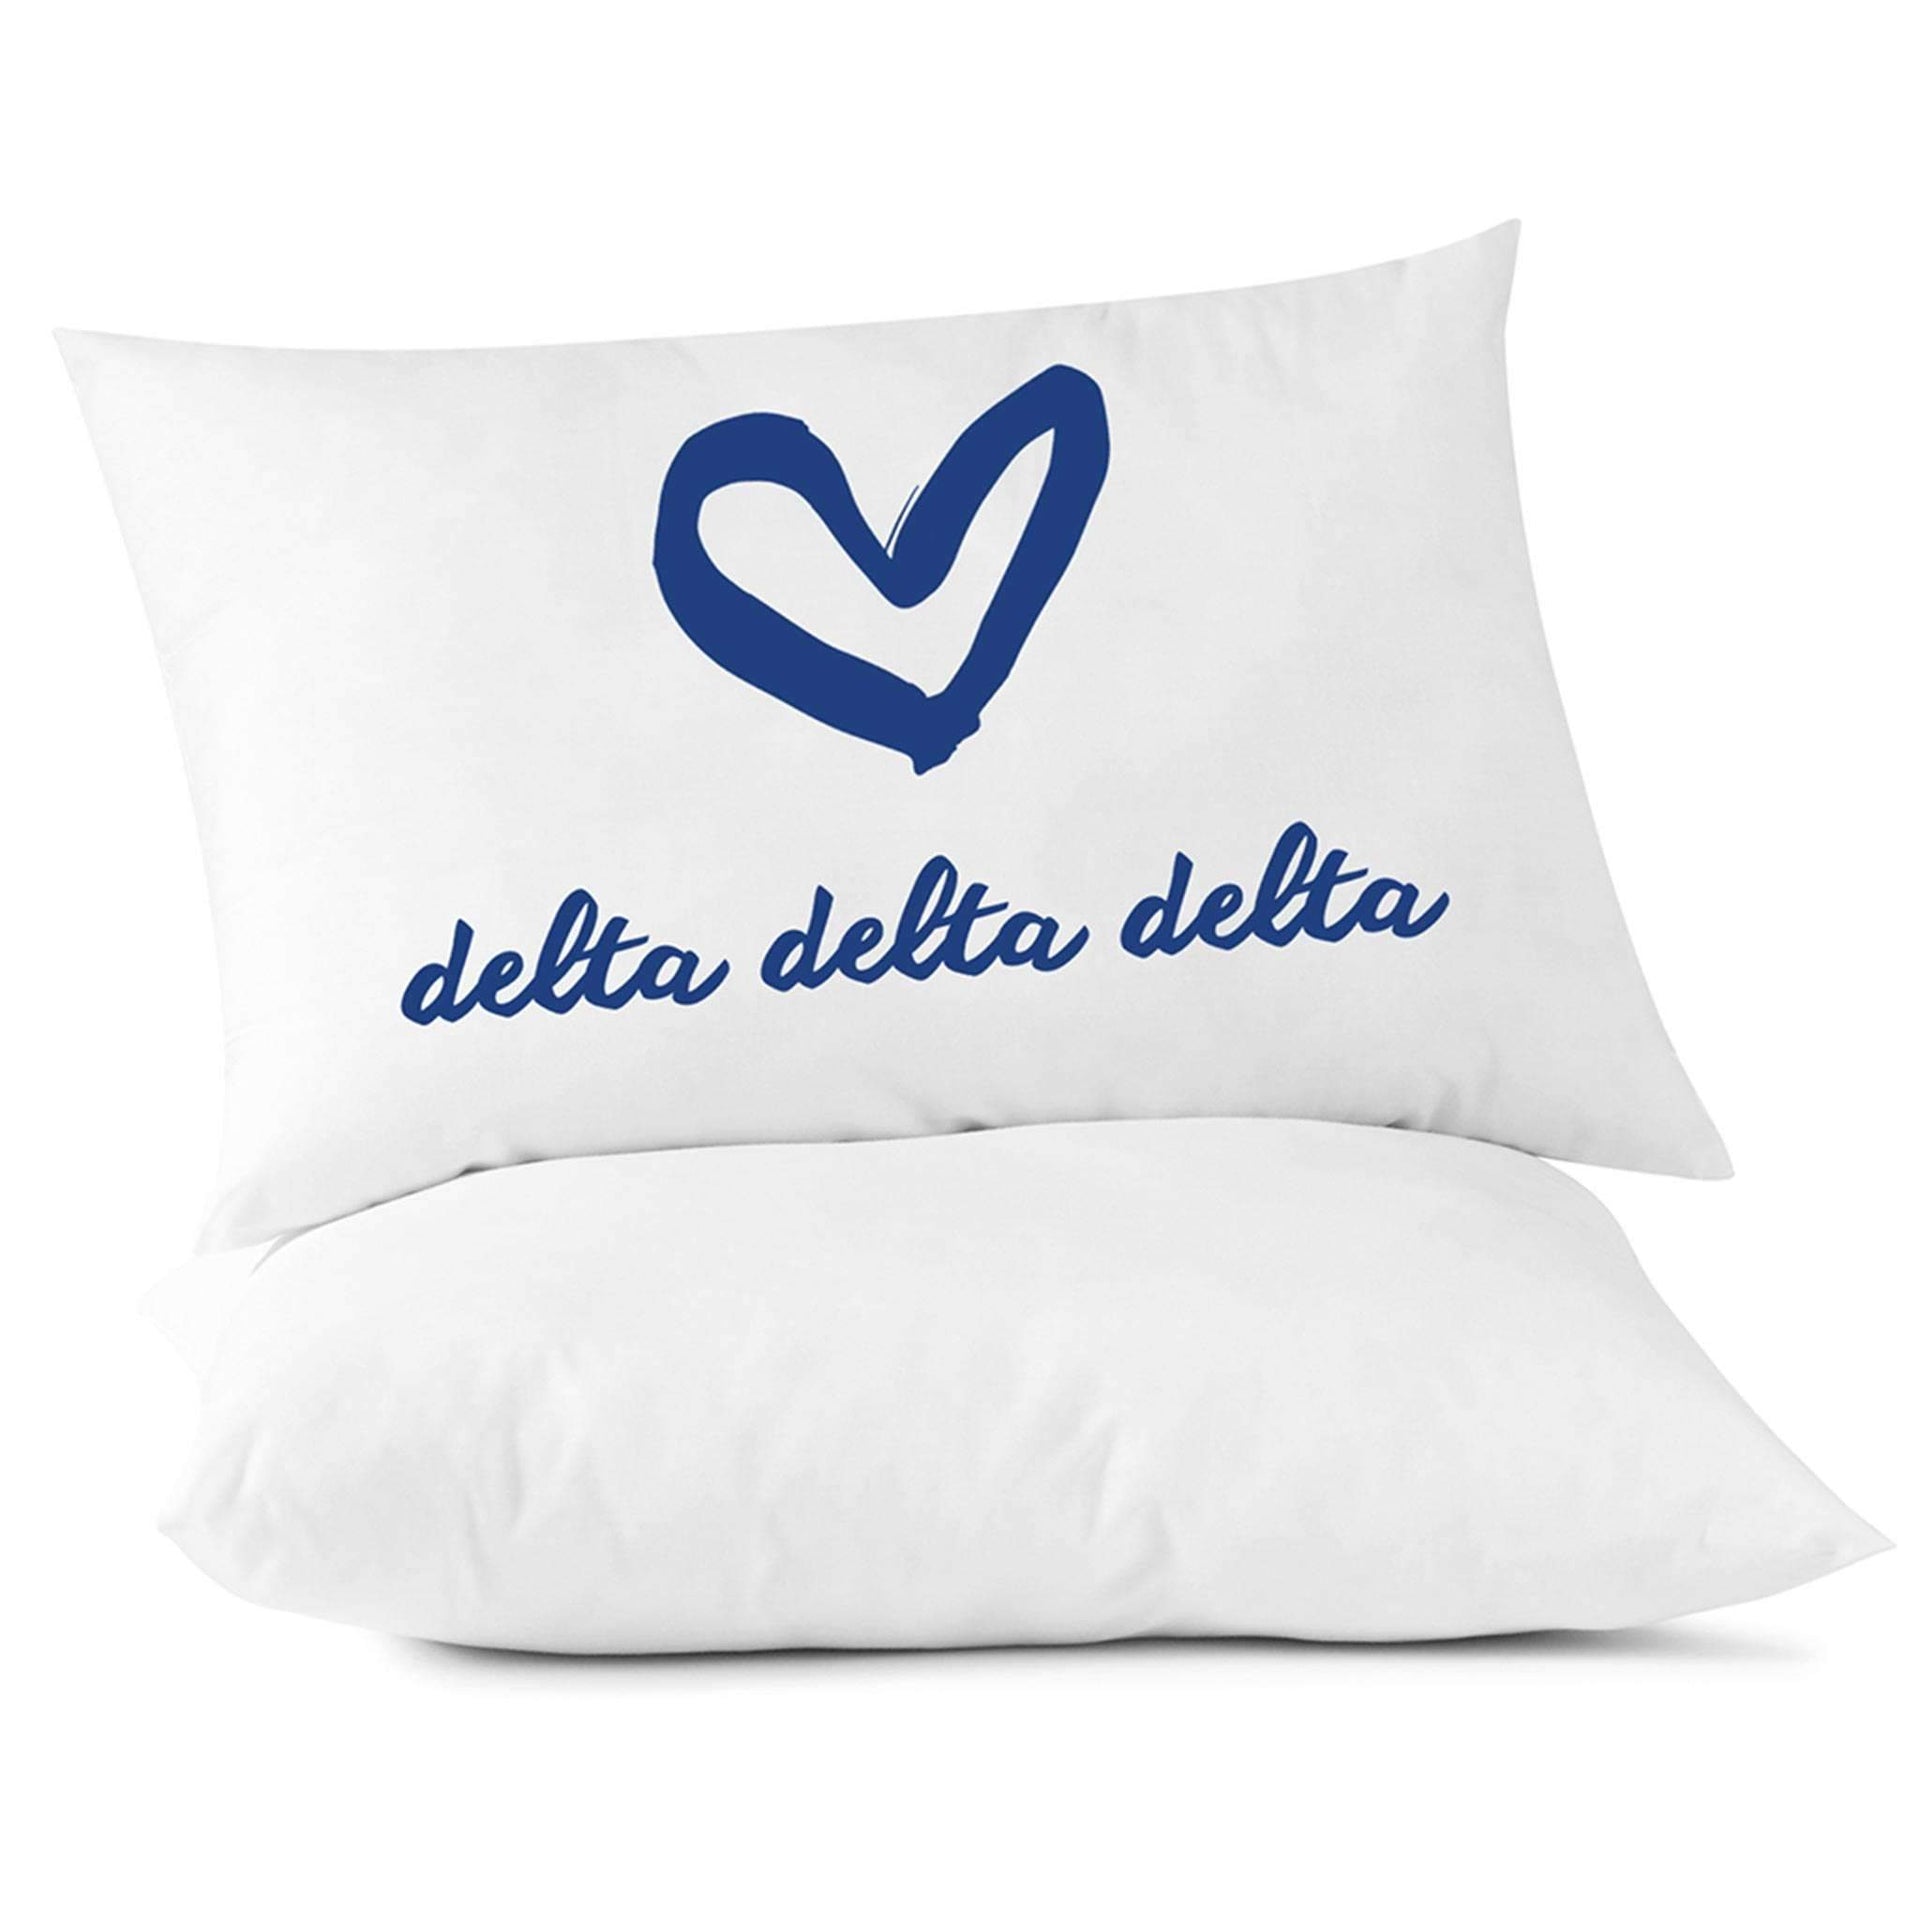 Tri Delta sorority name with heart design custom printed o pillowcase.